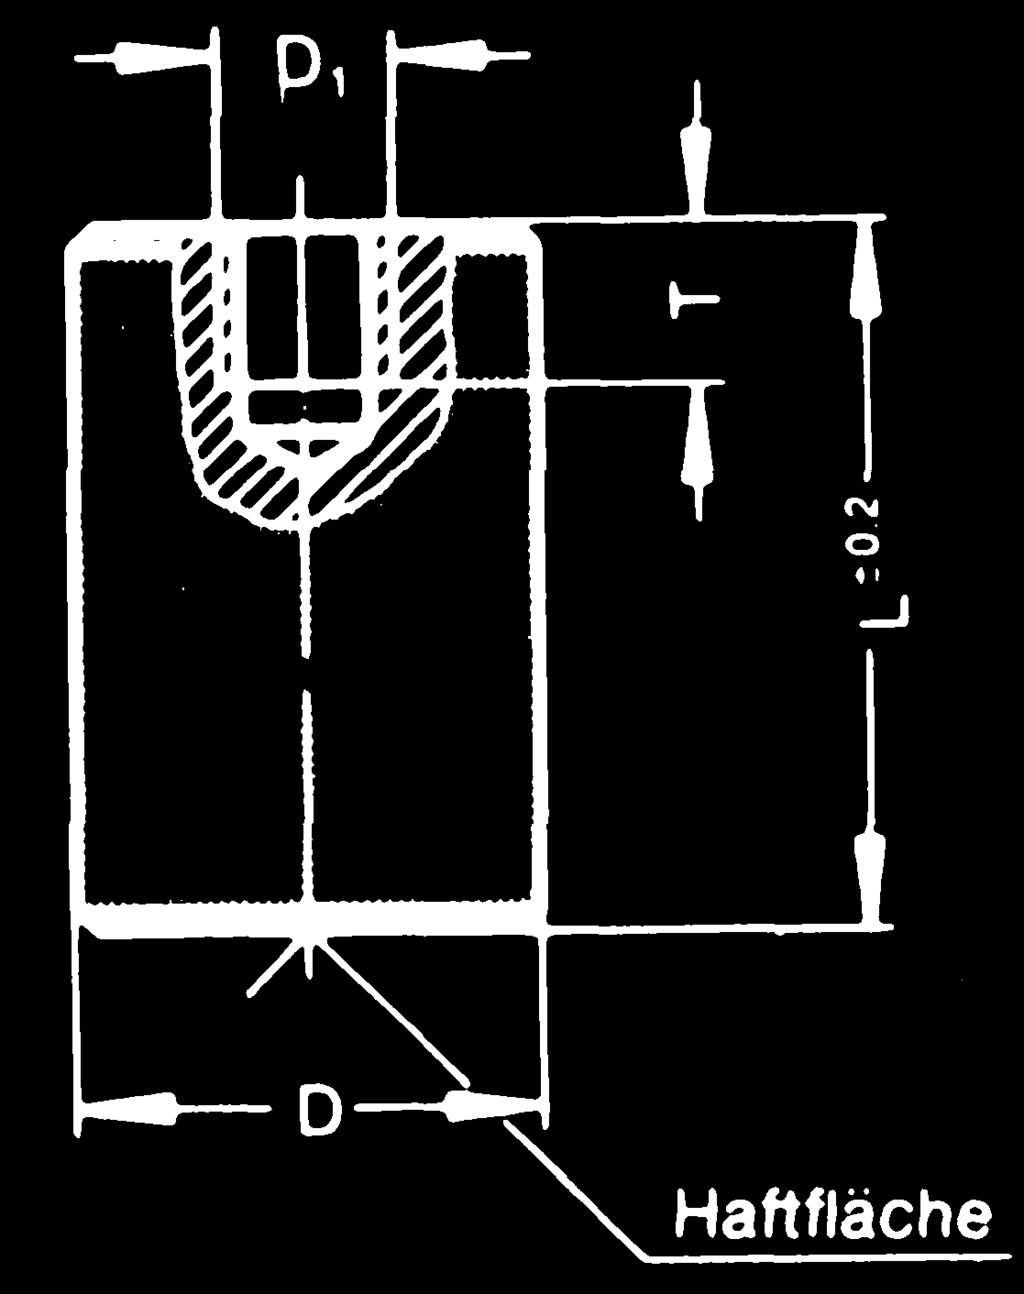 aftmagnet (Orga-Magnet) weiß mit rotem ufdruck Rohmagnet innenliegend Preis pro VPE = 4 Stück Ø öhe altekraft N 36 8,5 9,5 471021 0035 3,95 4161 Topfmagnete